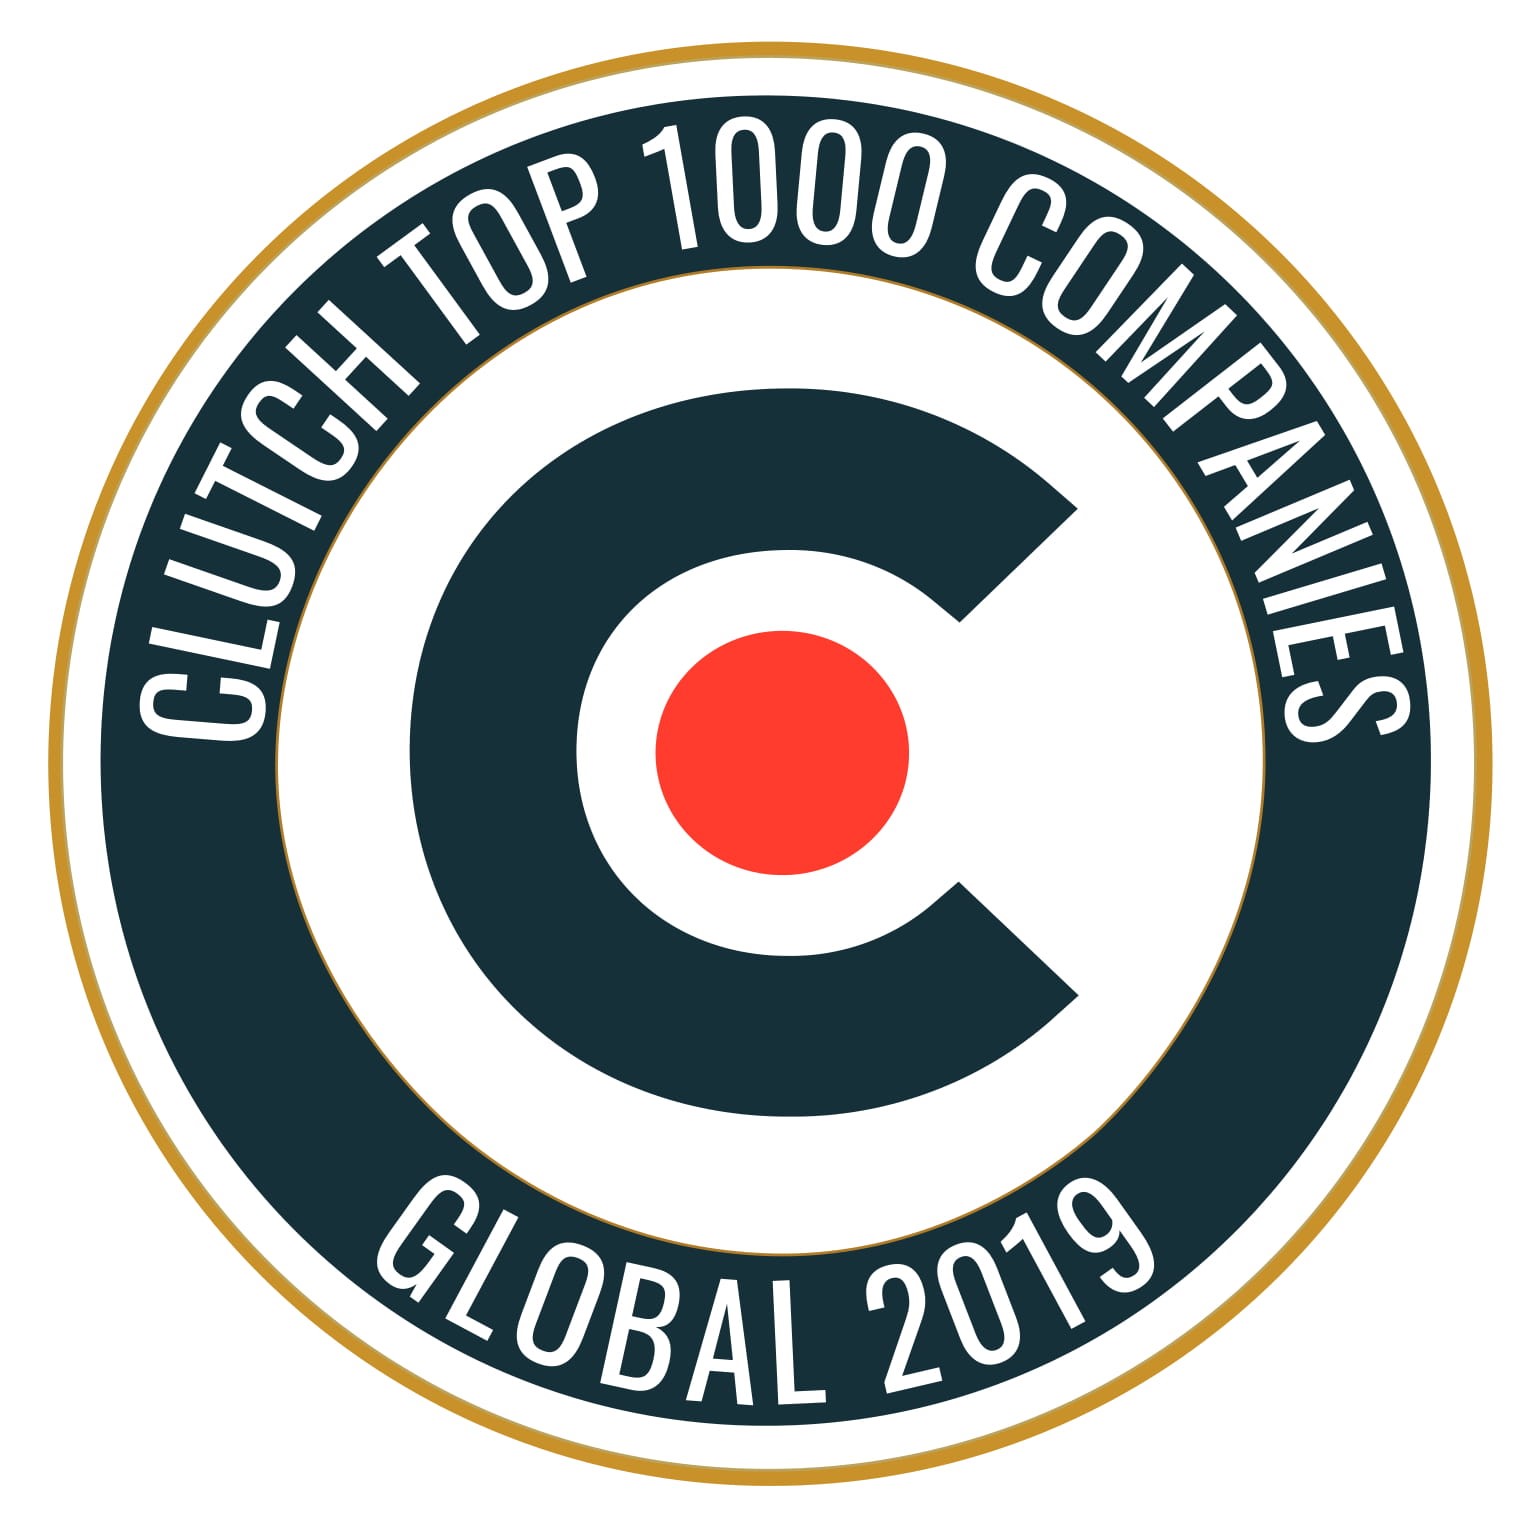 Clutch Top 1000 Companies Global Award 2019